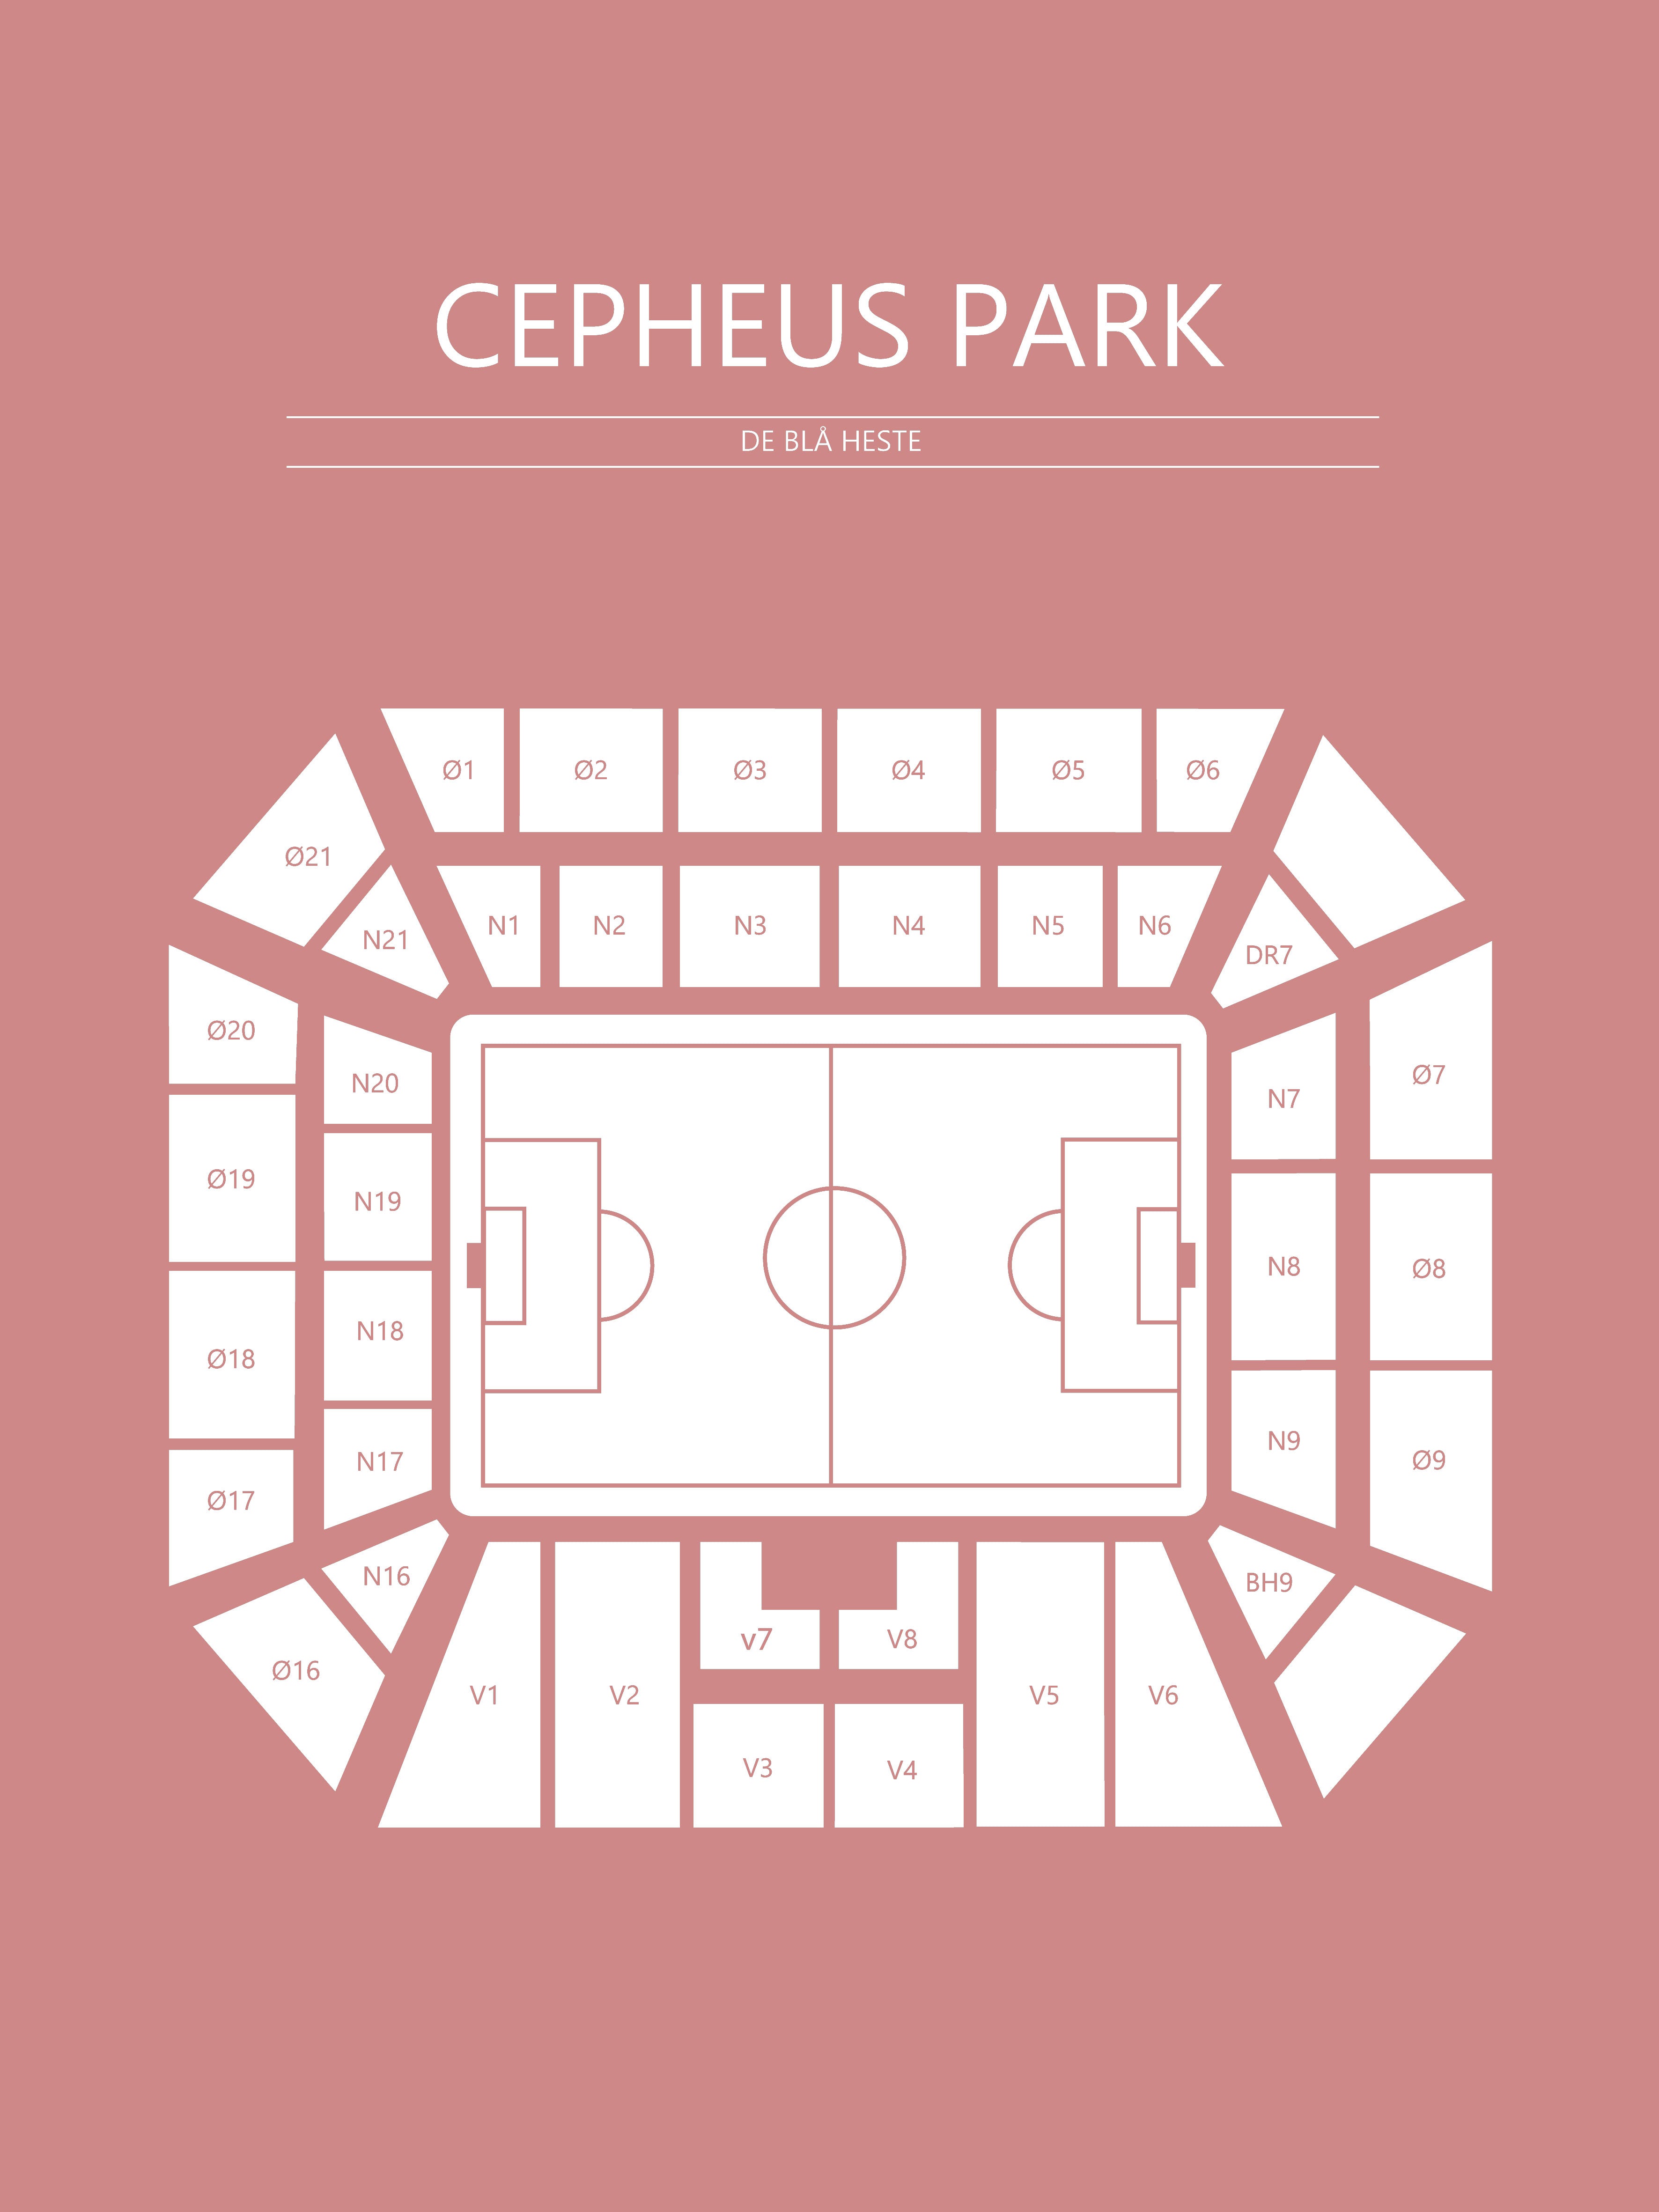 Fodbold plakat Randers Cepheus Park Blush